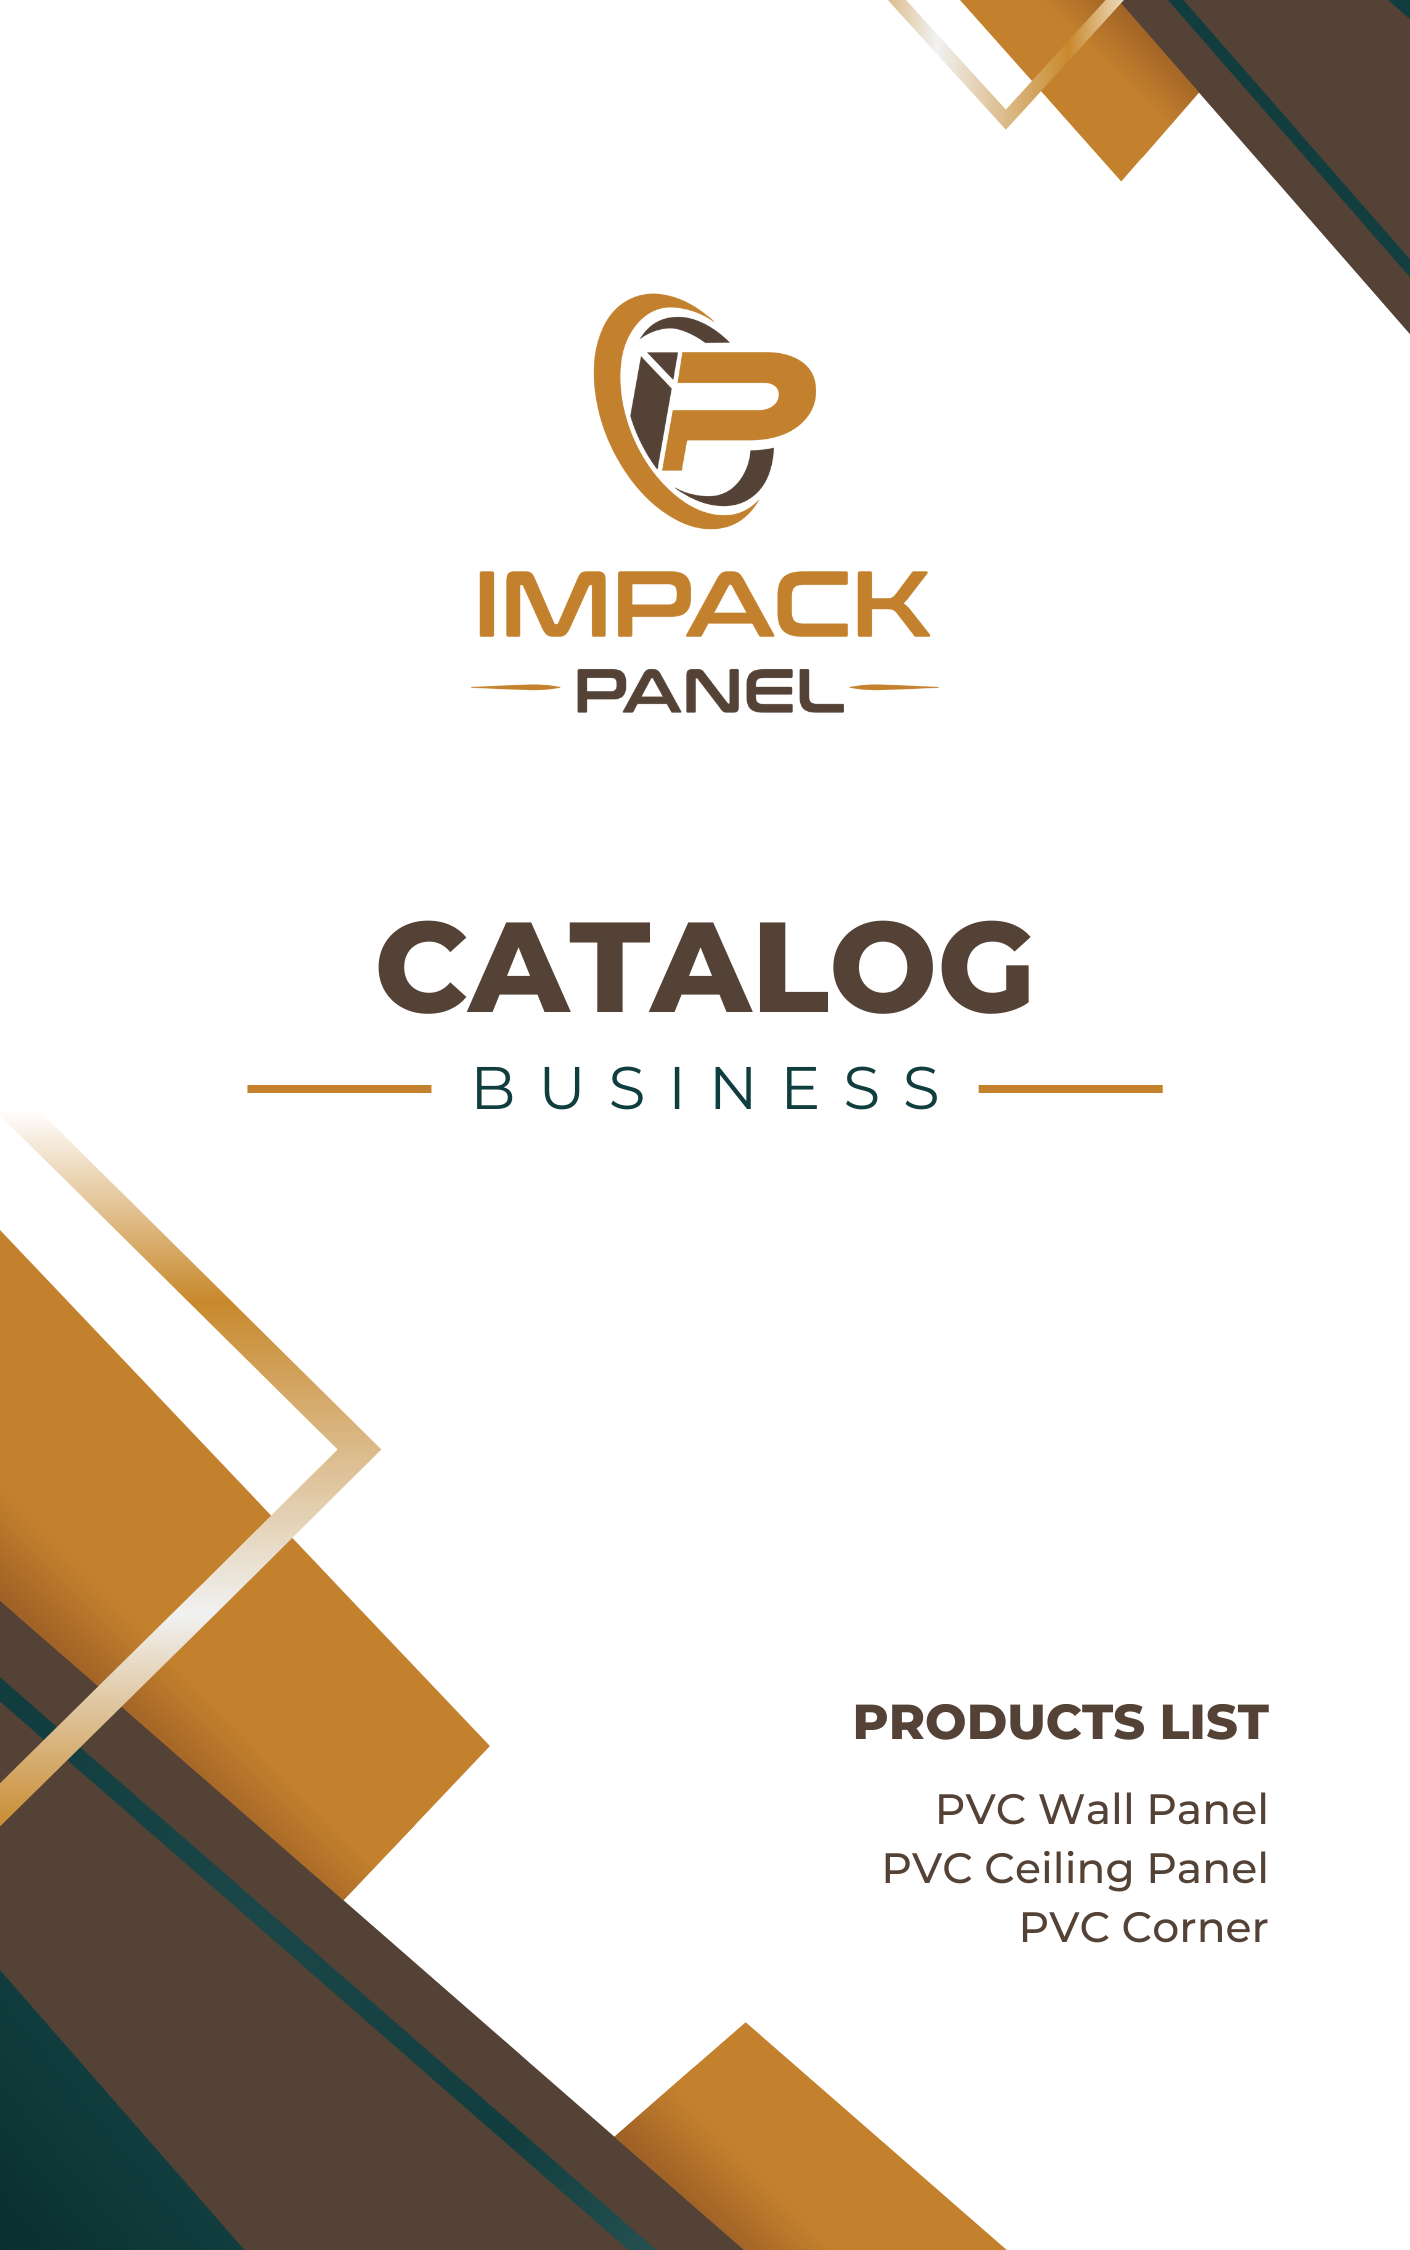 Impack Panel - Catalog